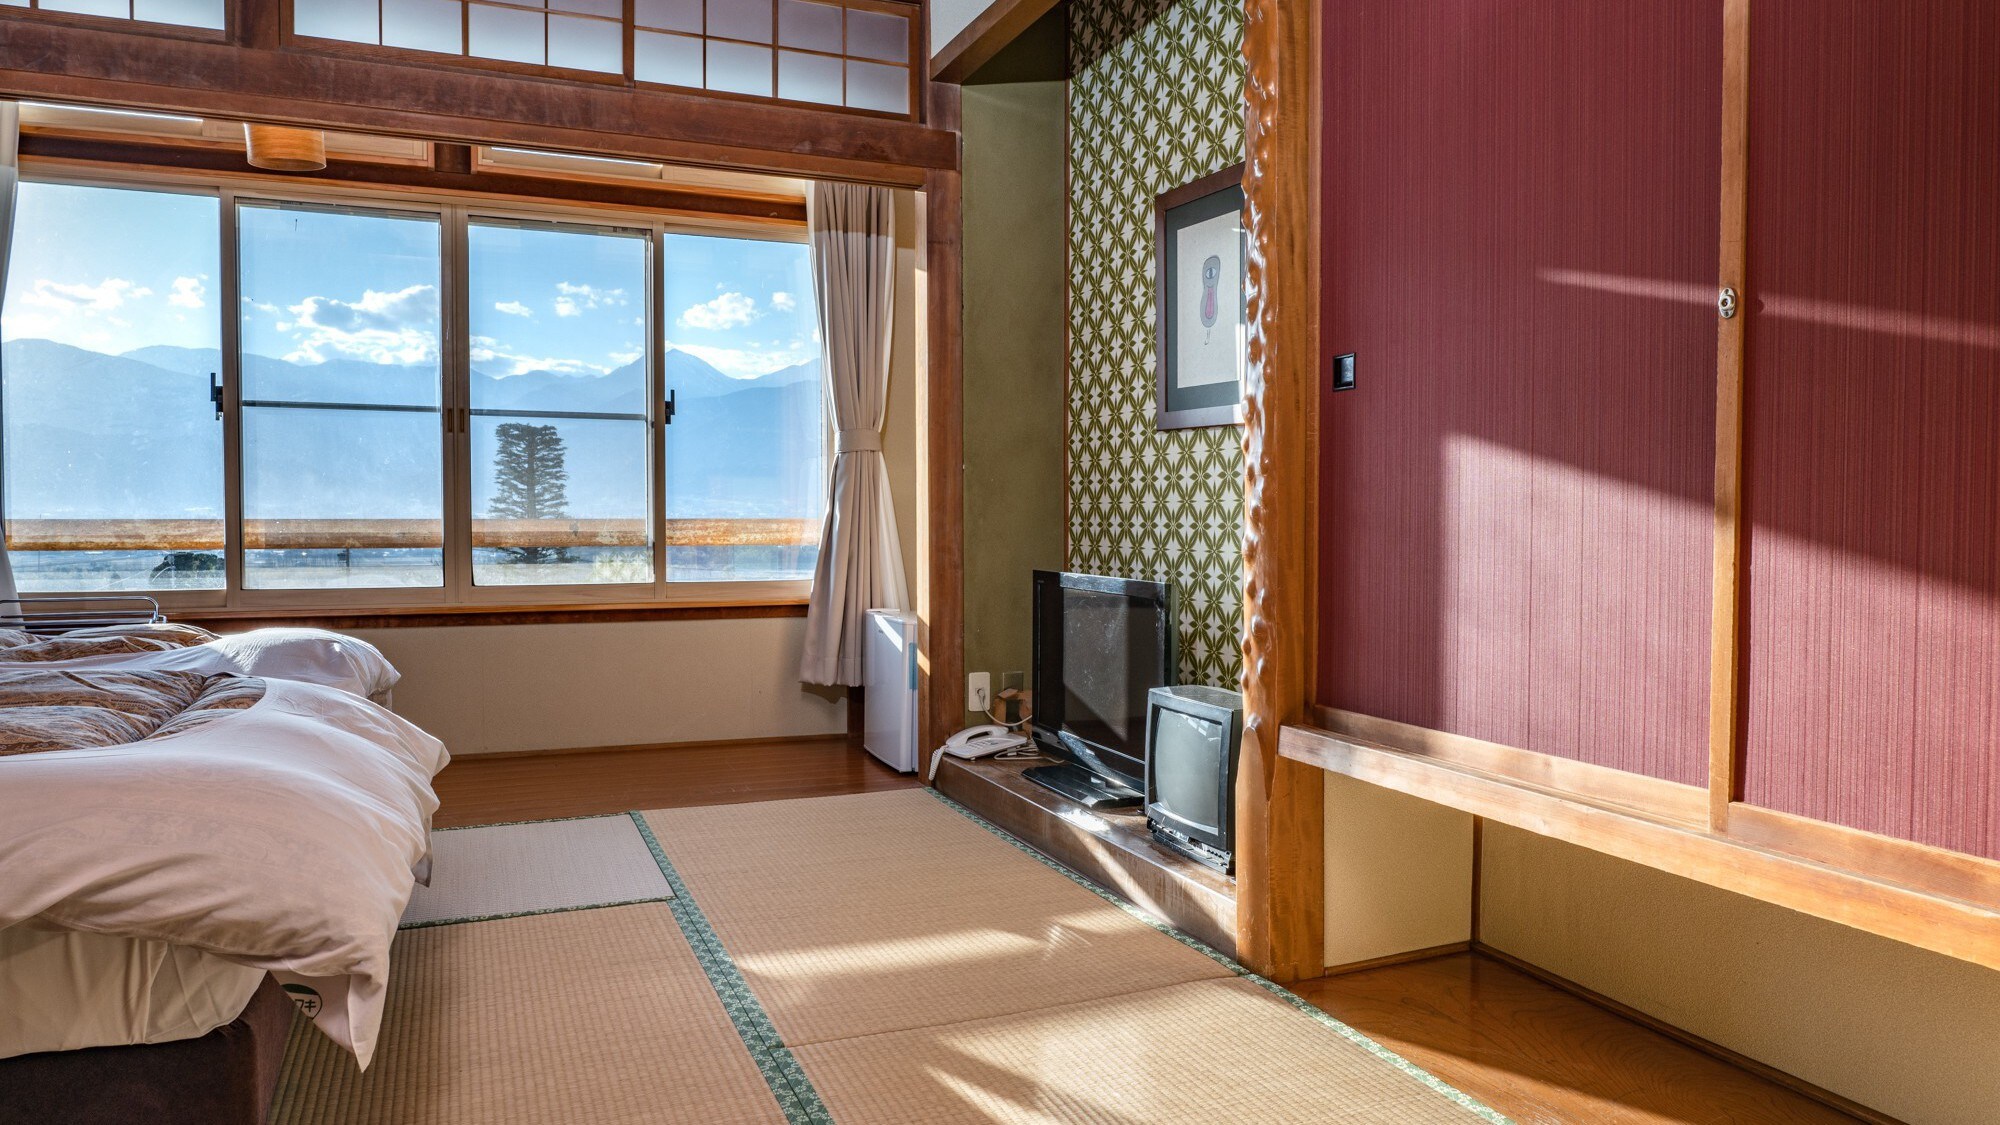 Japanese-style bedroom